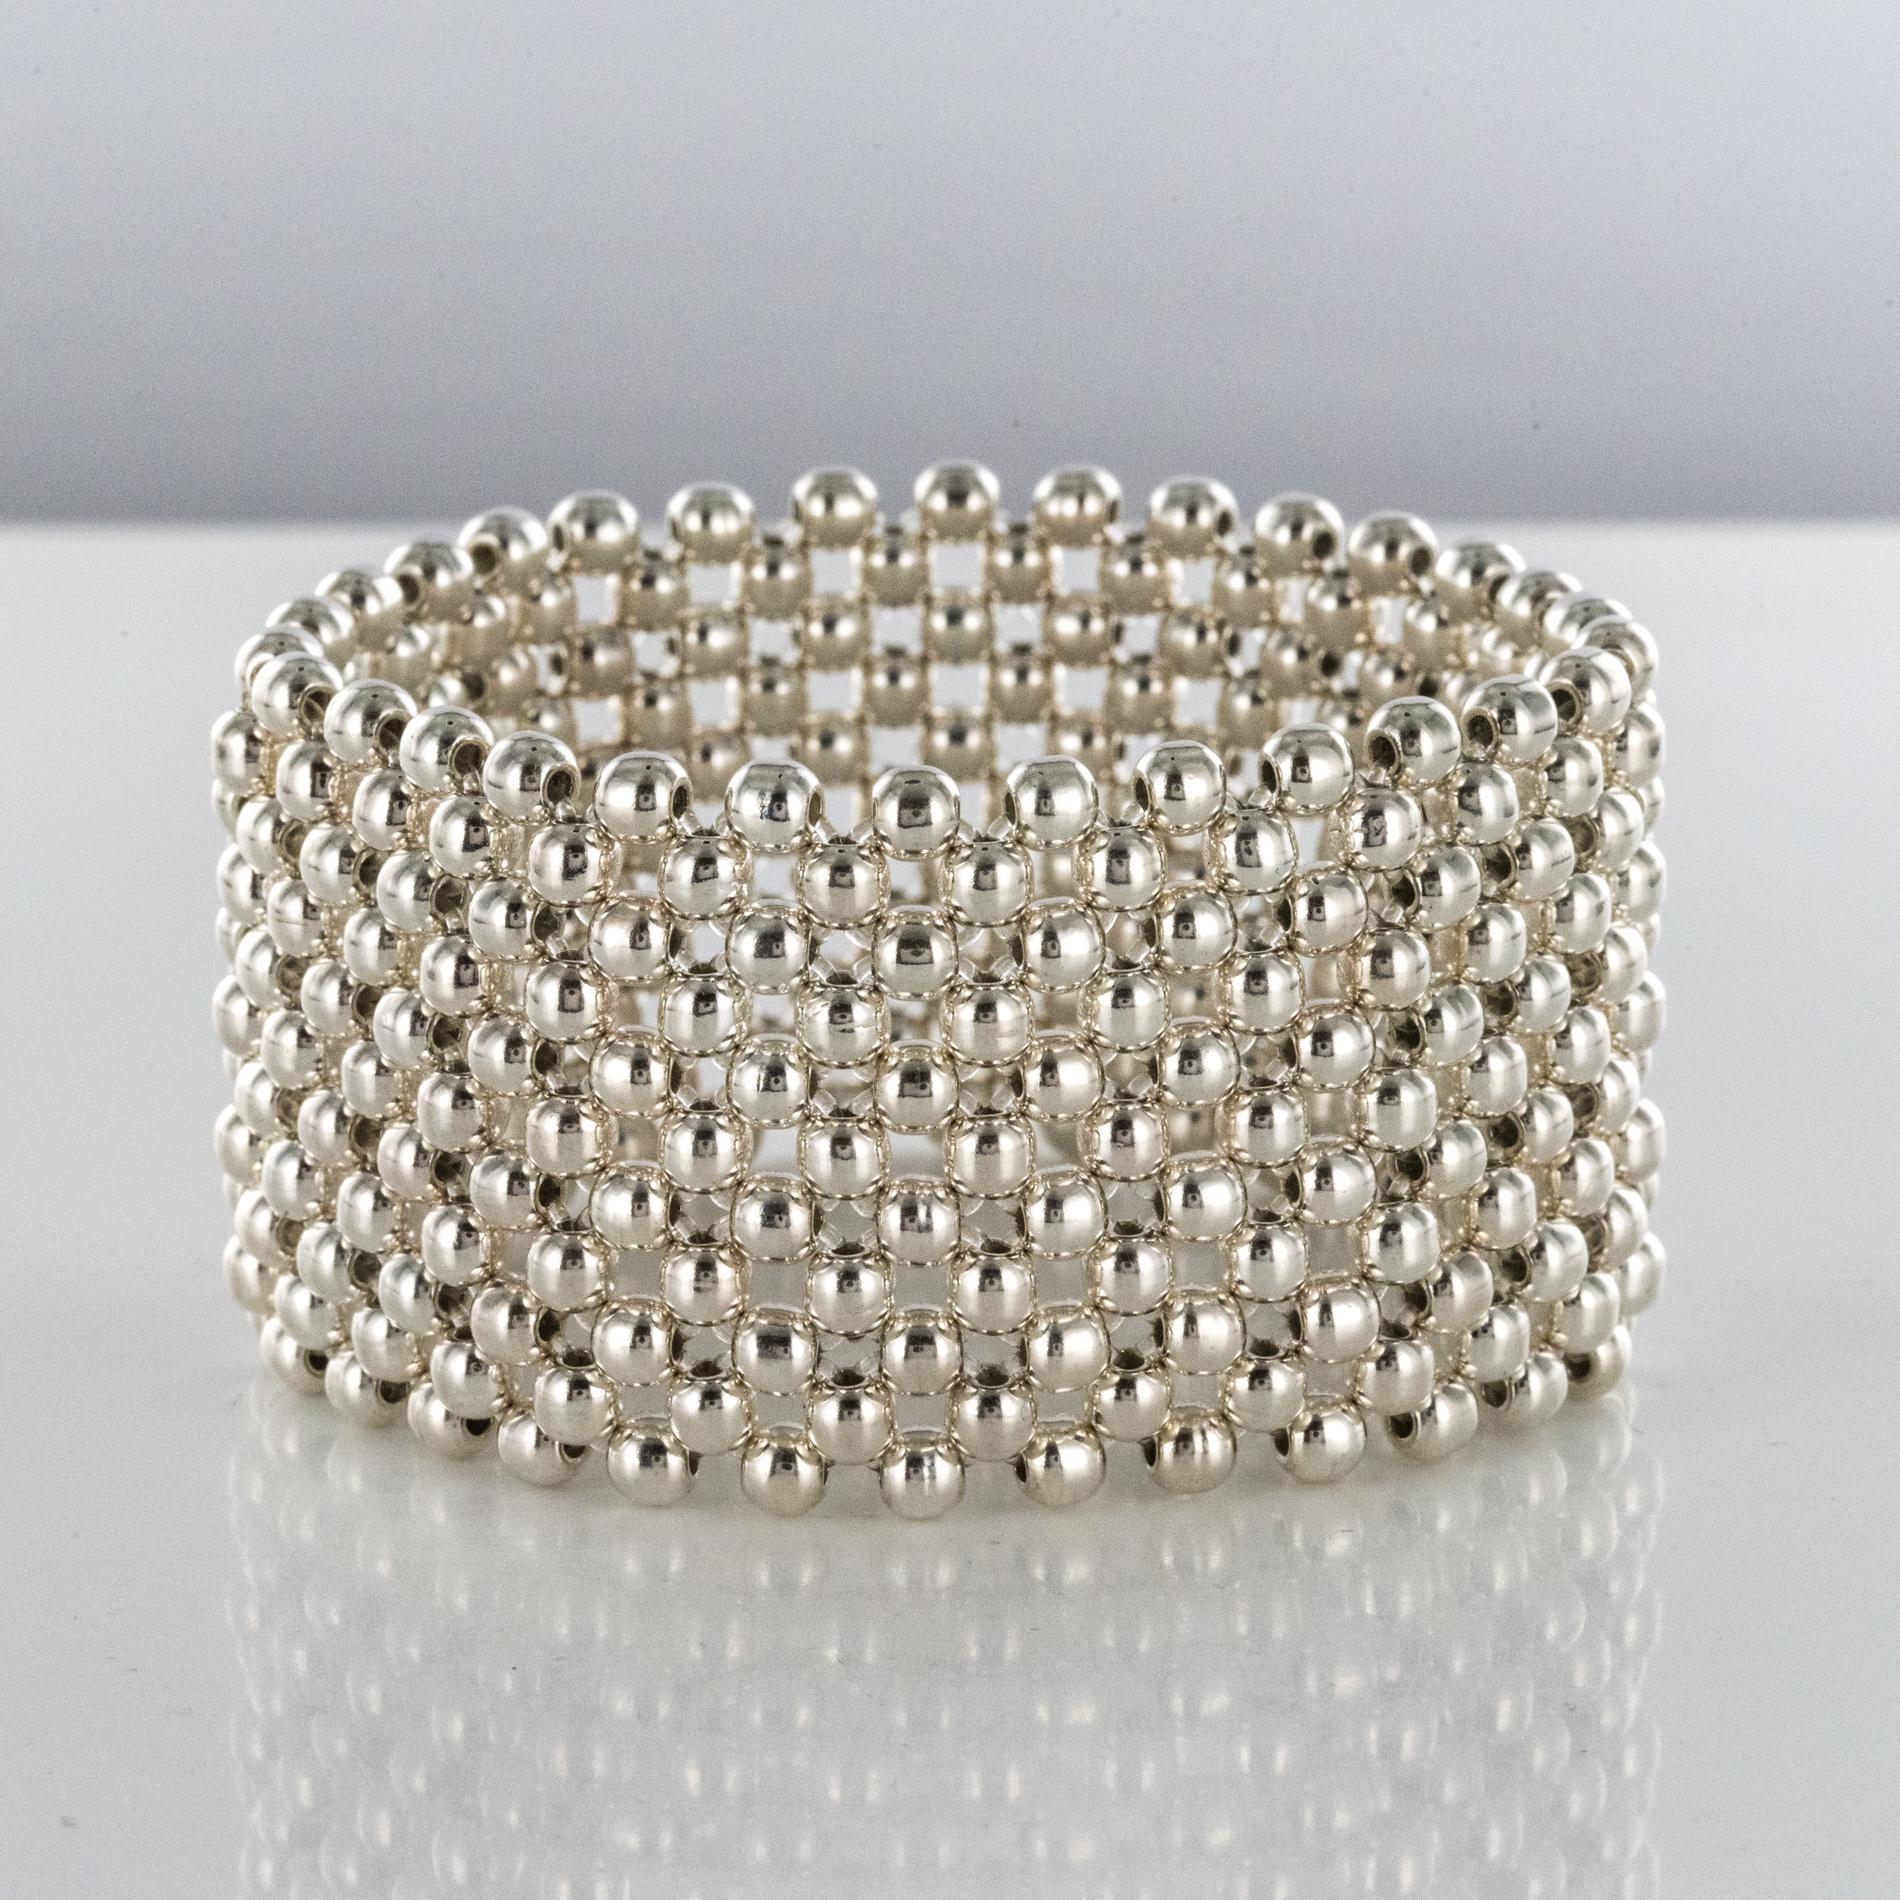 Modern Silver Pearls Cuff Bracelet 6